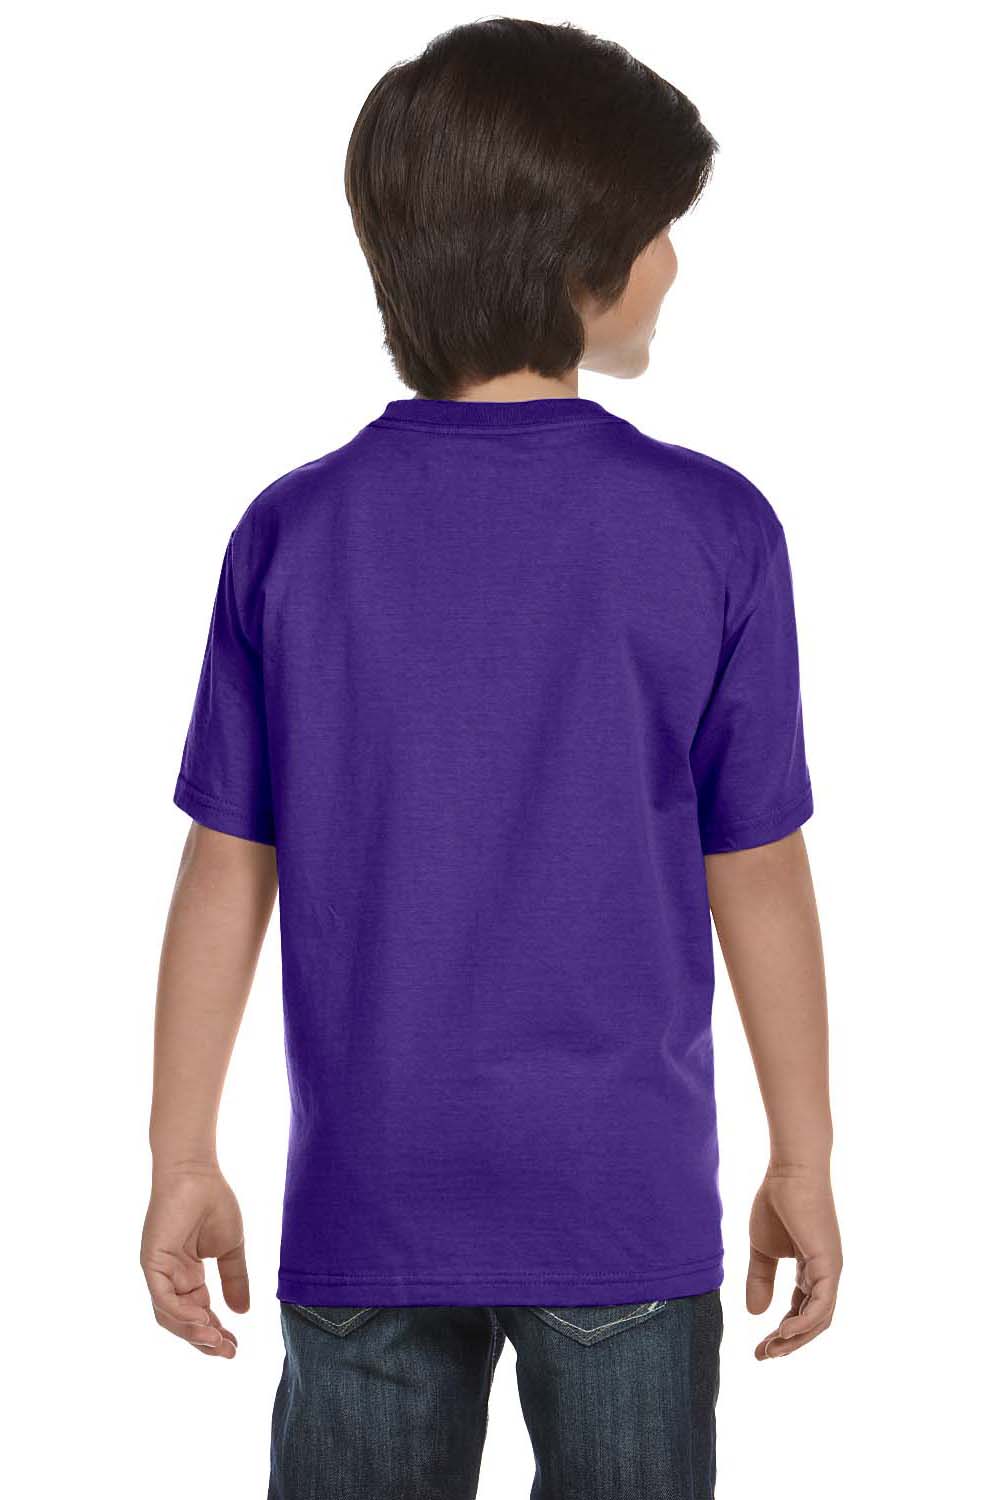 Hanes 5380 Youth Beefy-T Short Sleeve Crewneck T-Shirt Purple Back